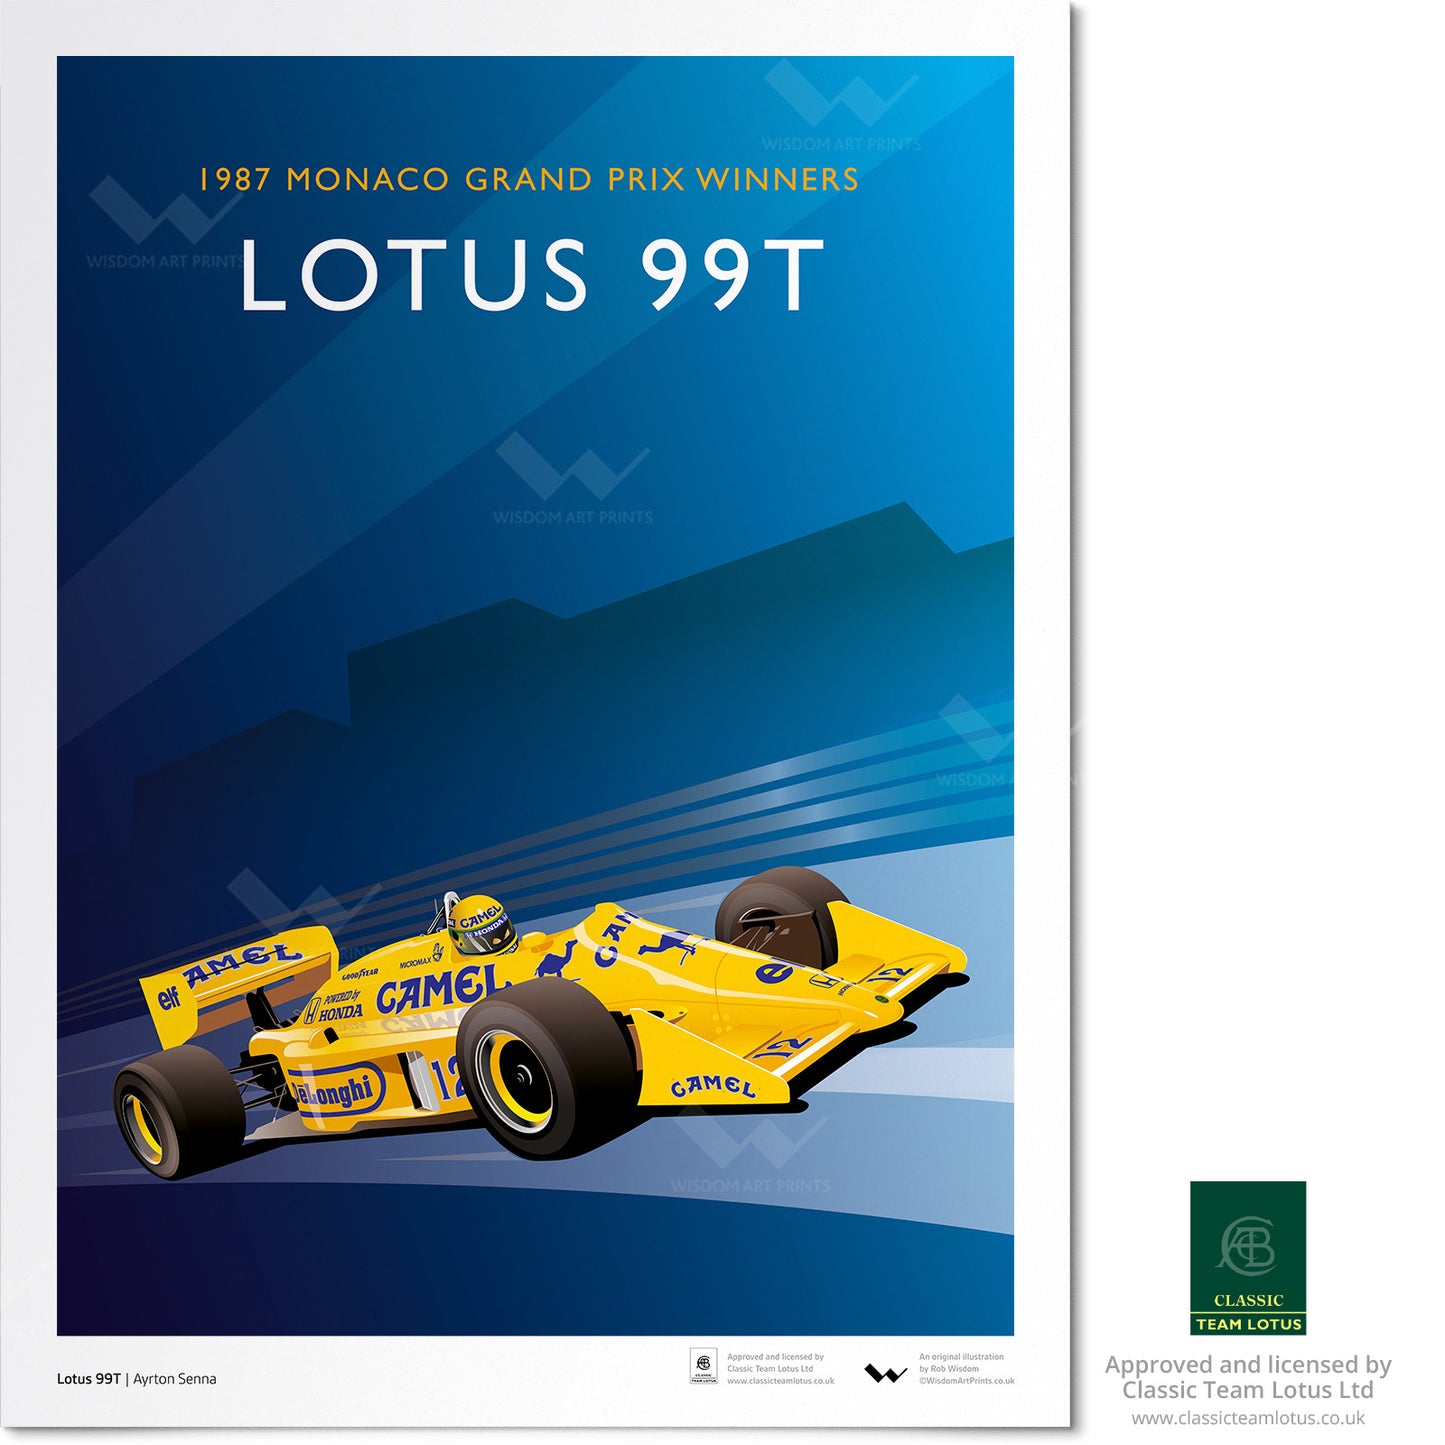 Illustration of the Lotus 99T, as driven by Ayrton Senna